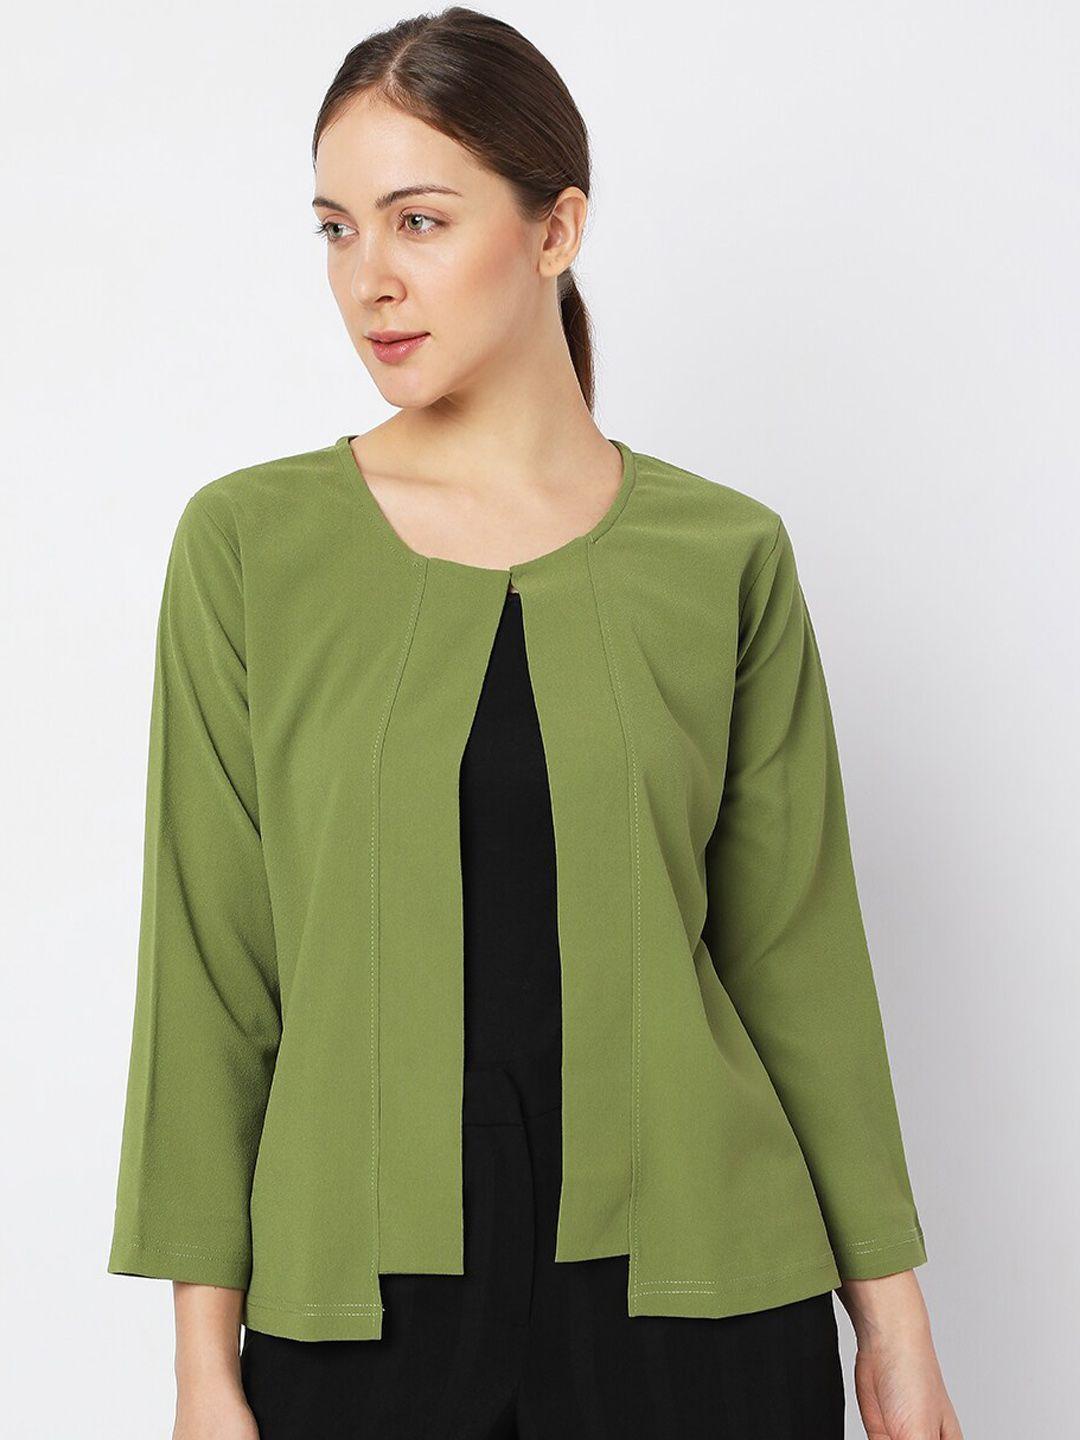 smarty pants women olive green lightweight open front jacket